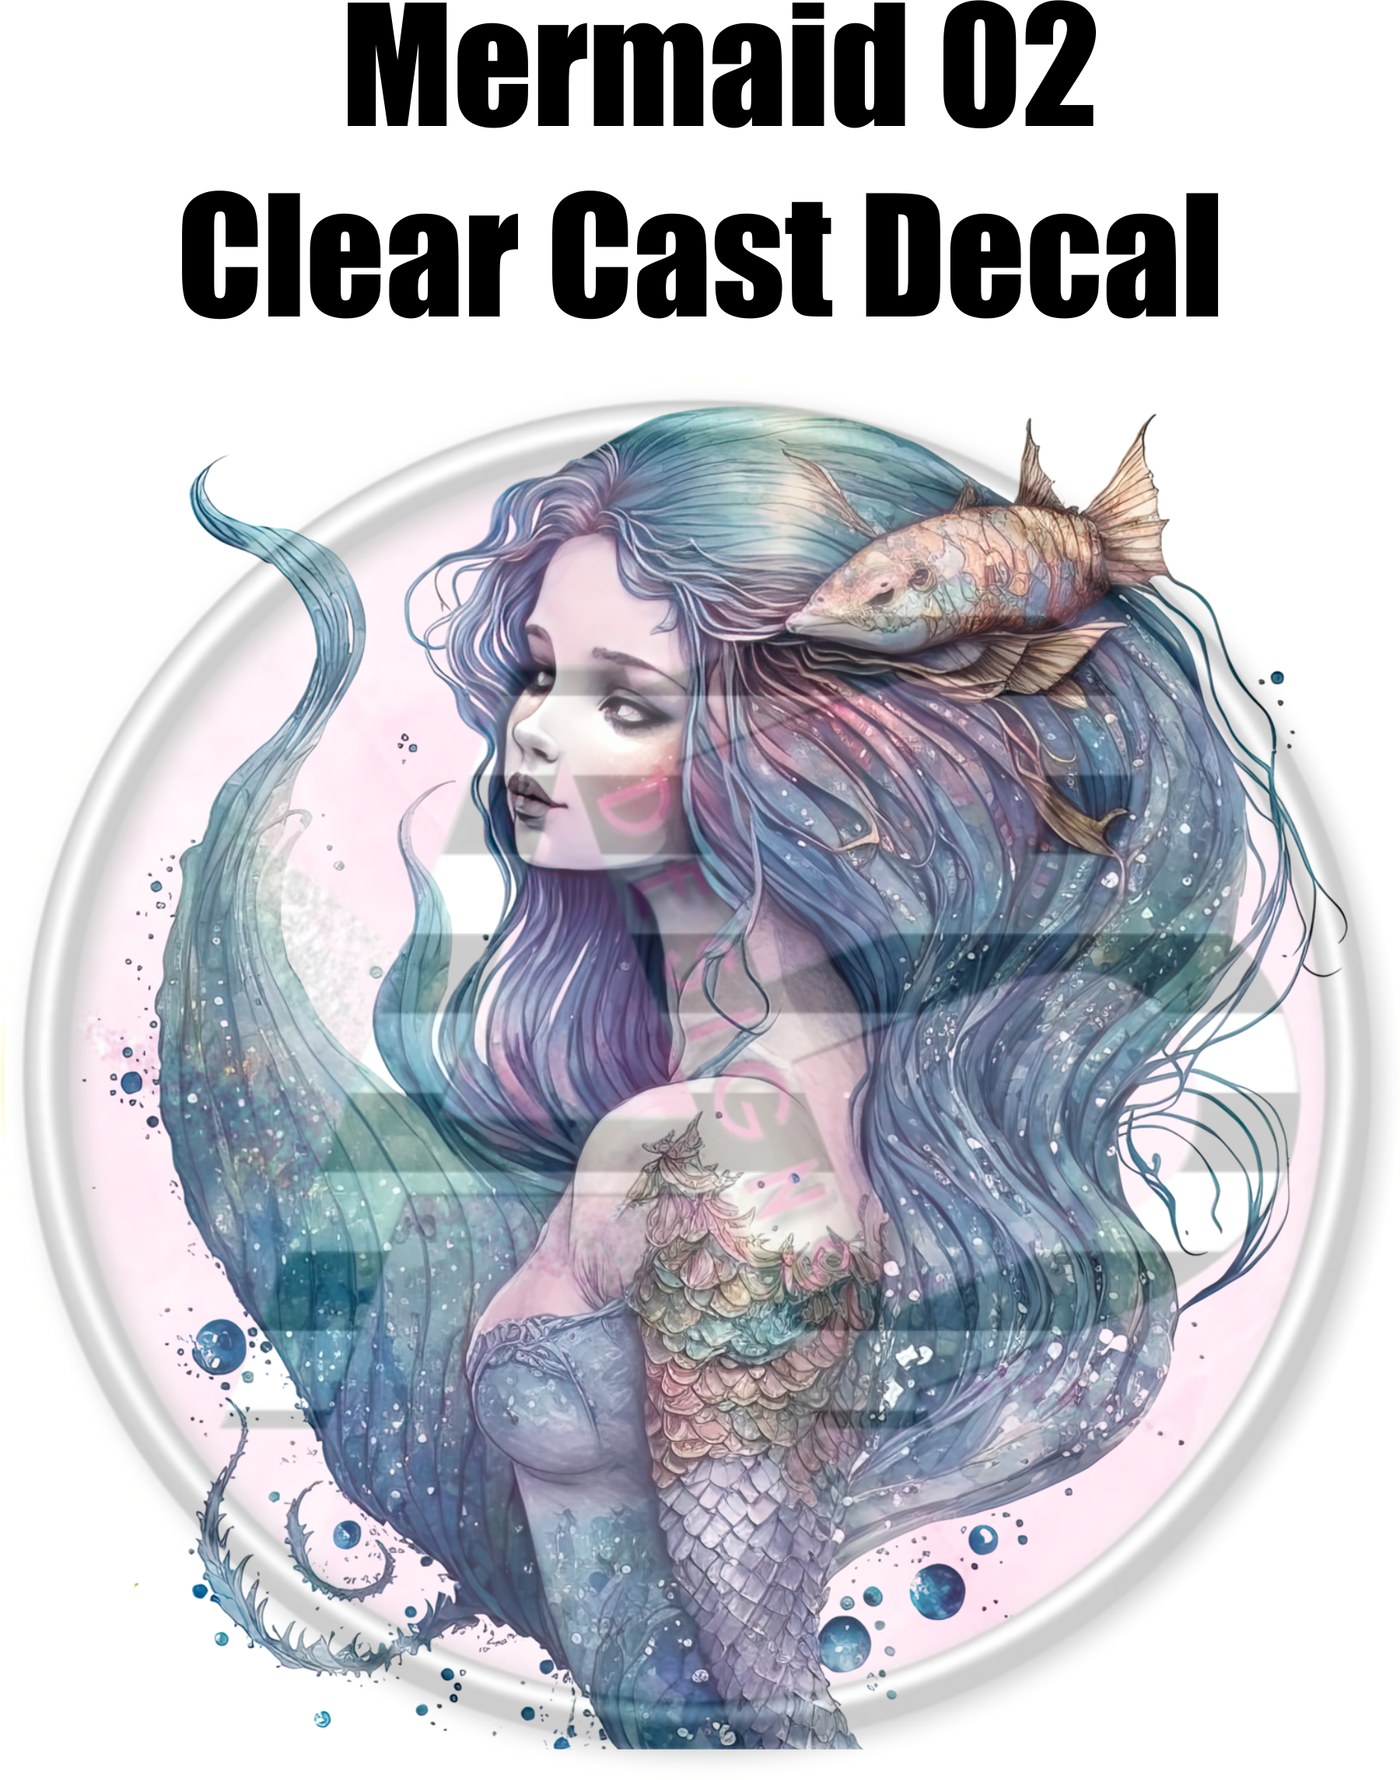 Mermaid 02 - Clear Cast Decal